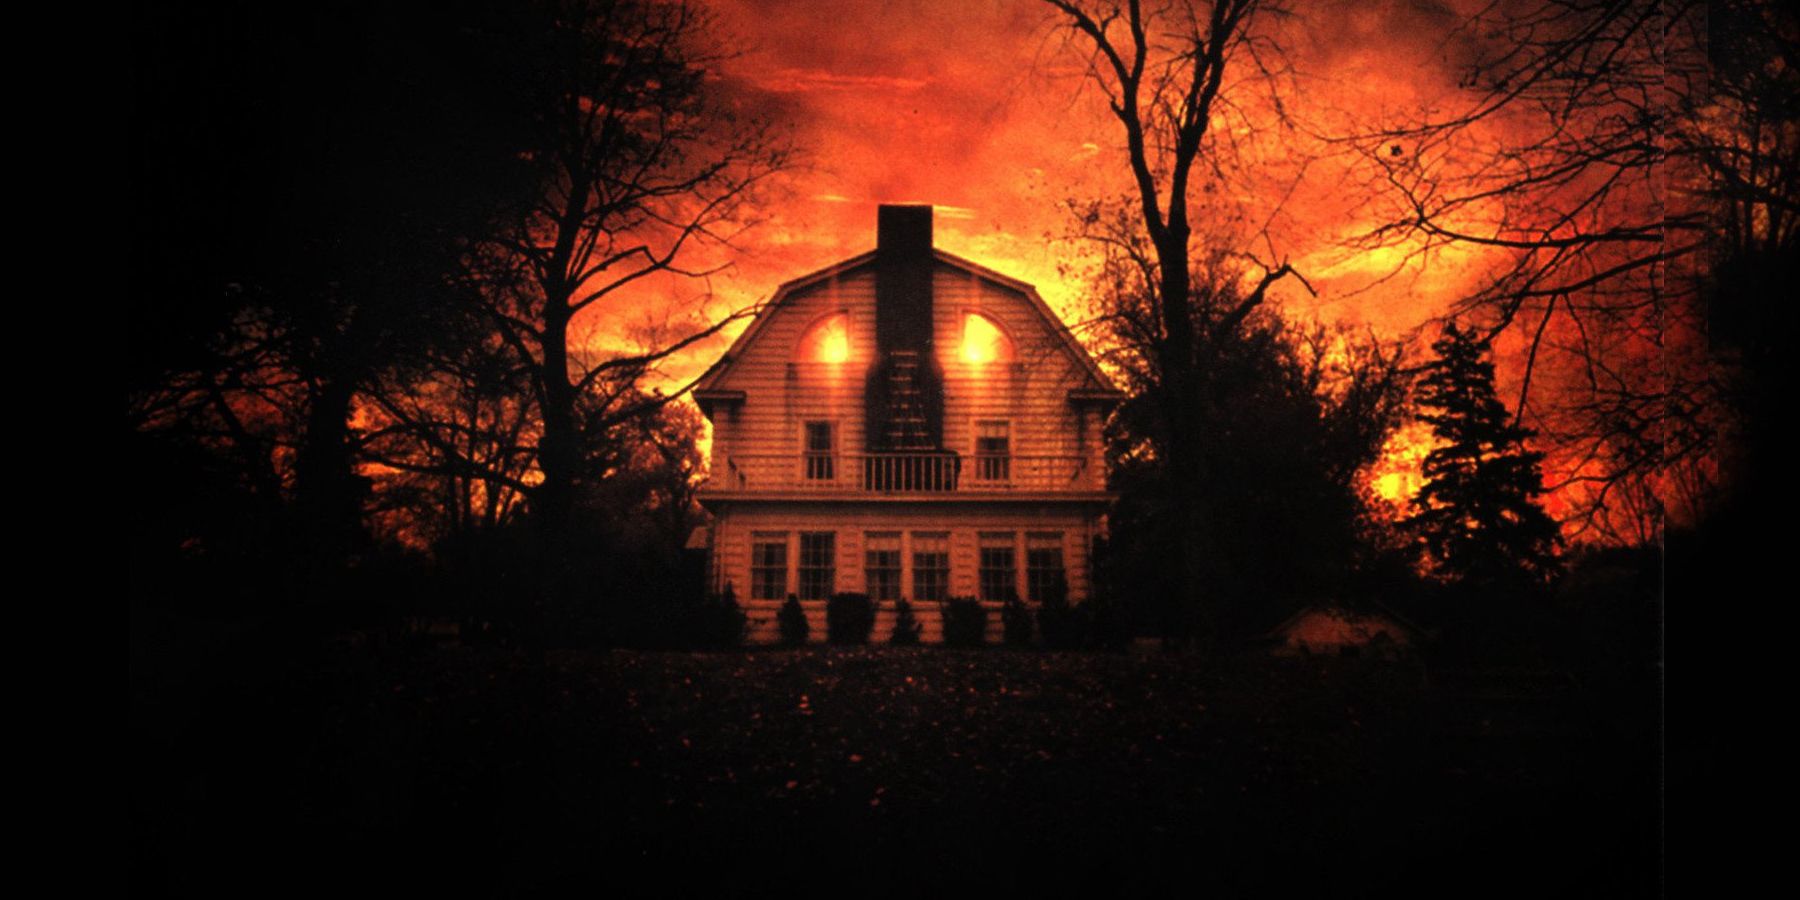 The Amityville Horror 1979 movie house